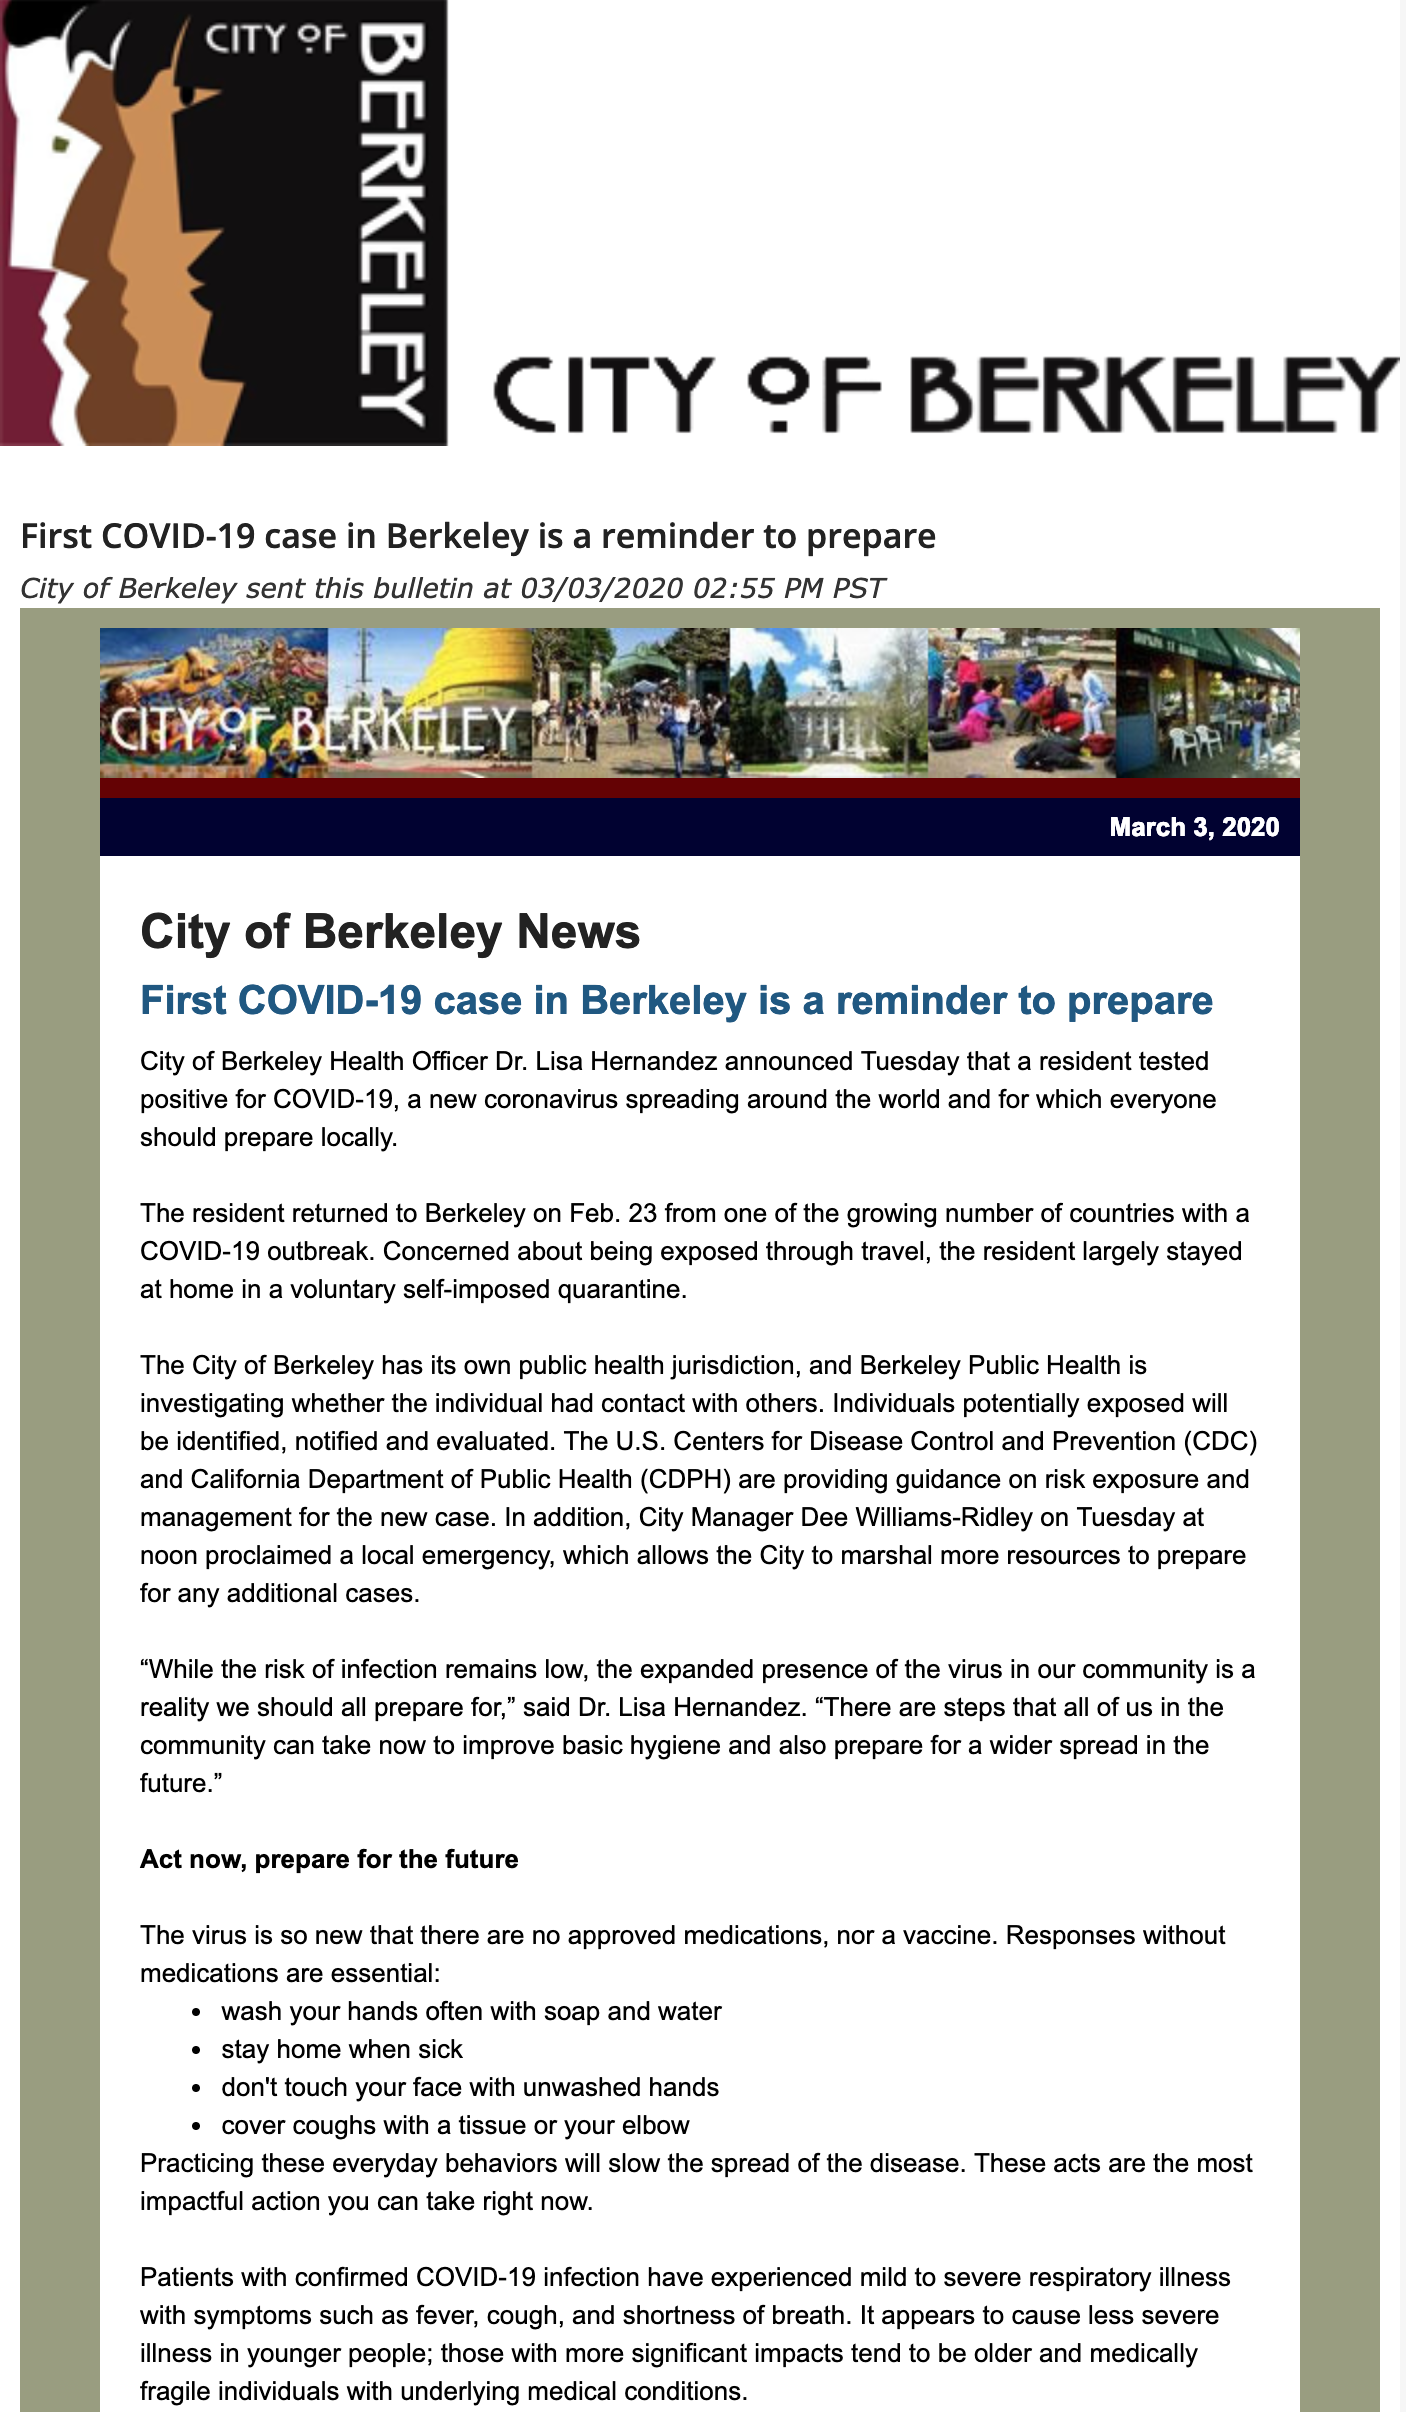 screenshot of email bulletin sent by City of Berkeley 